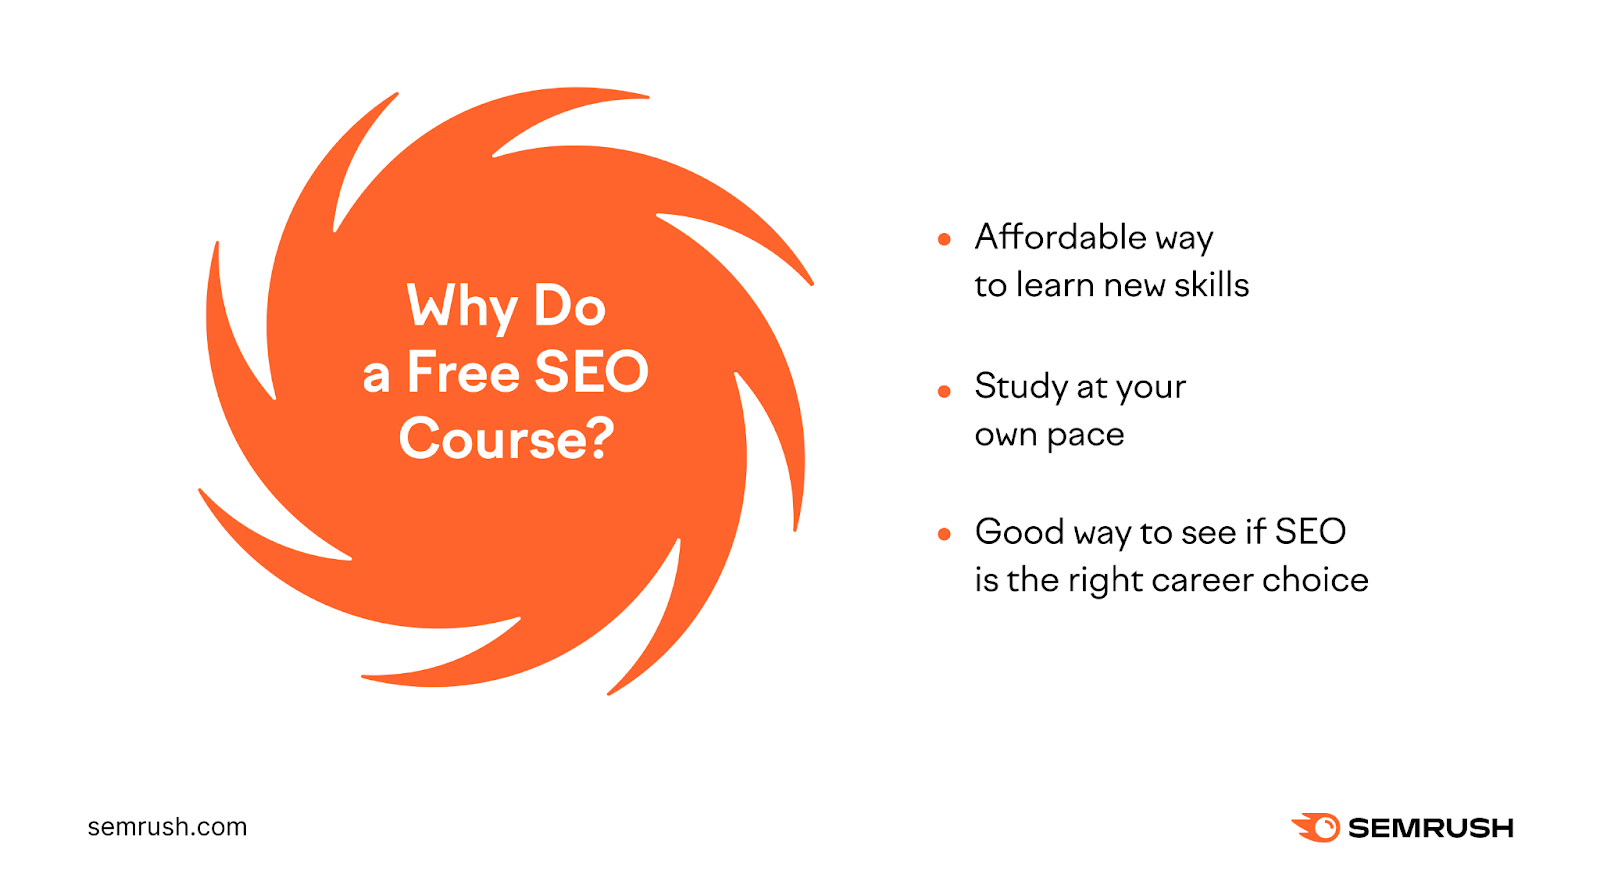 Why do a free SEO course